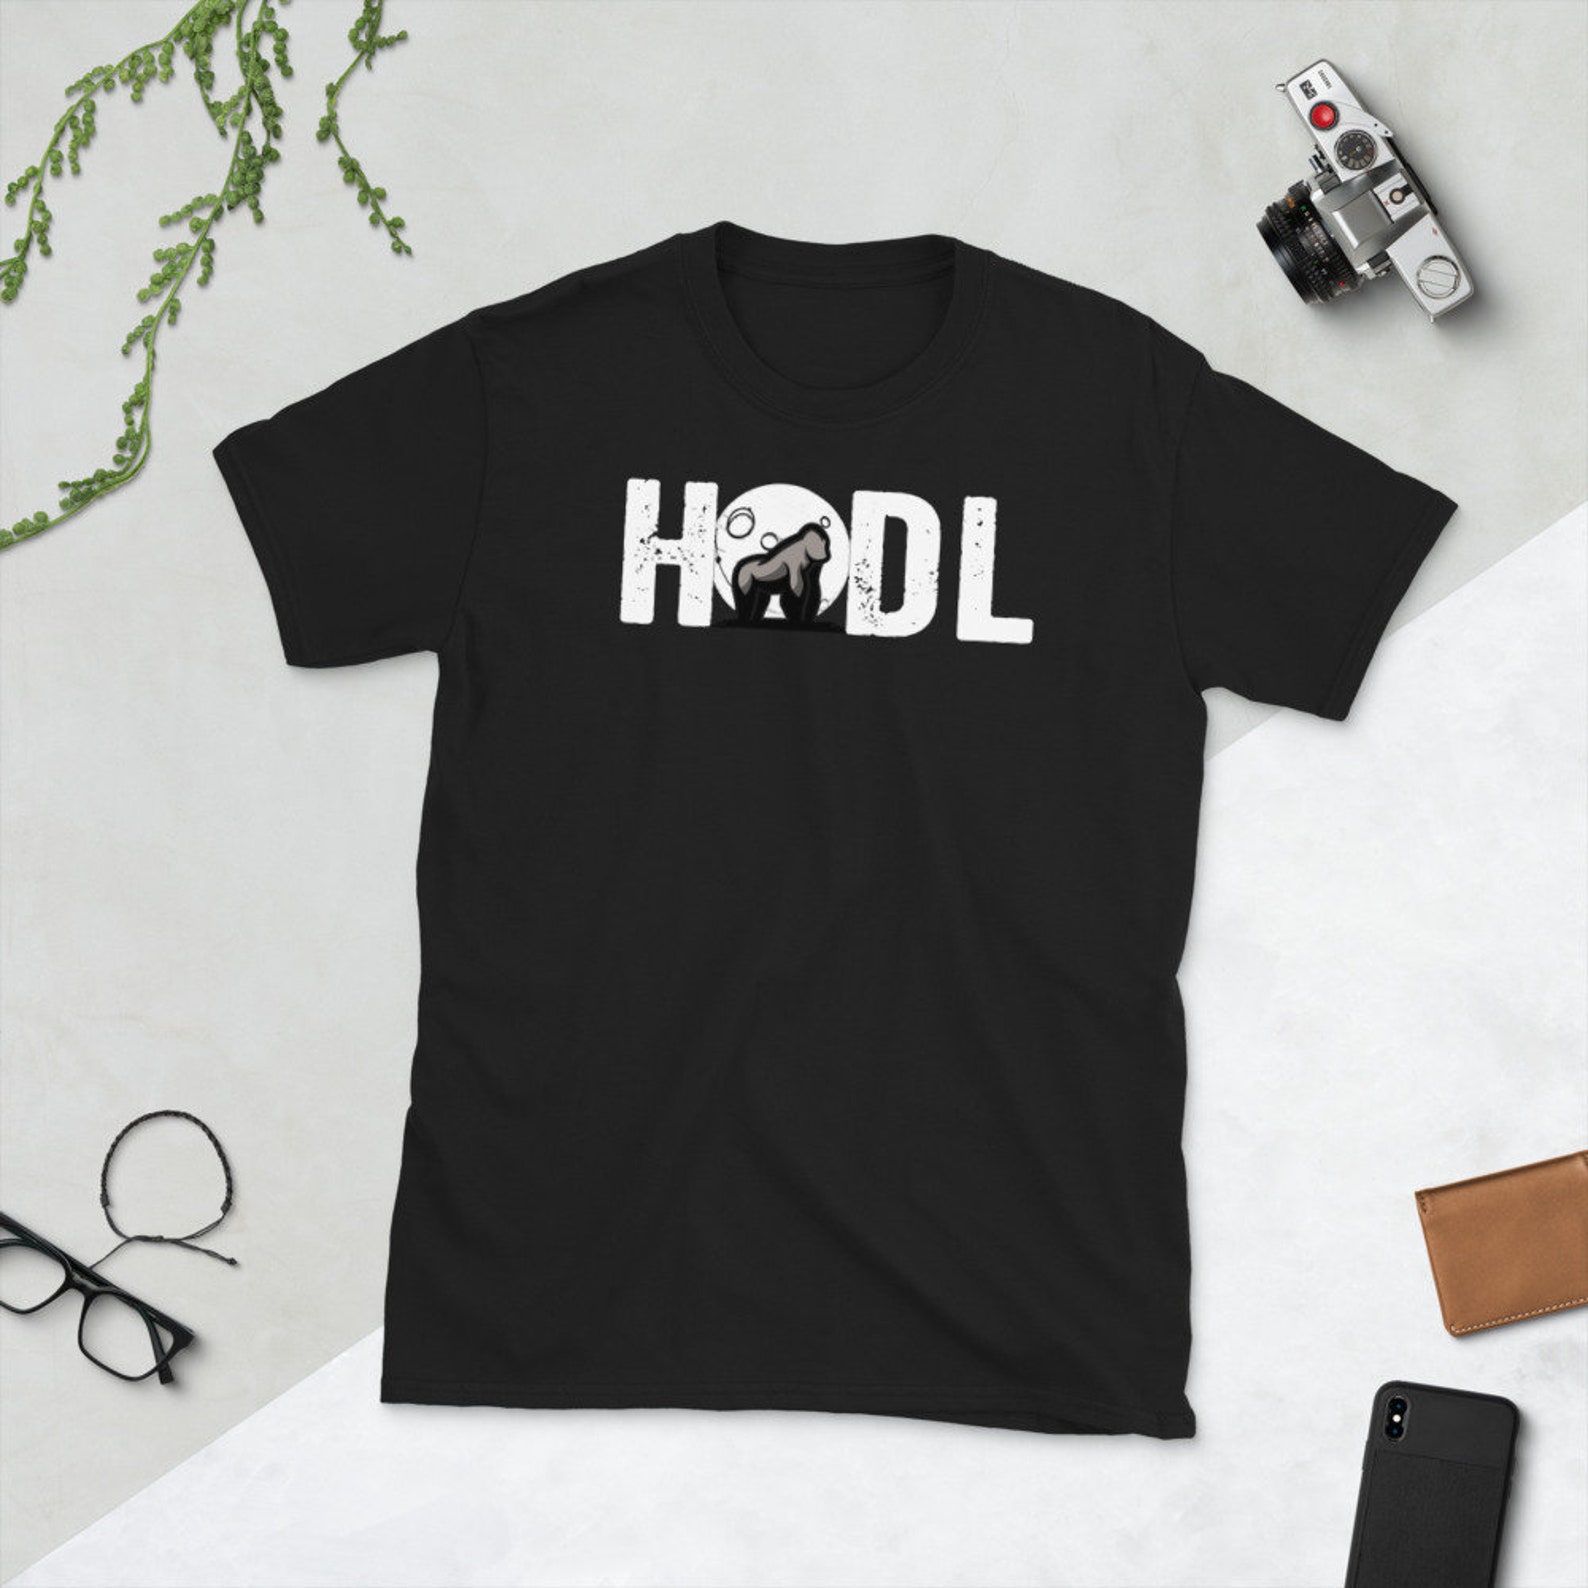 HODL Ape Strong Together Shirt Wallstreetbets WSB Reddit